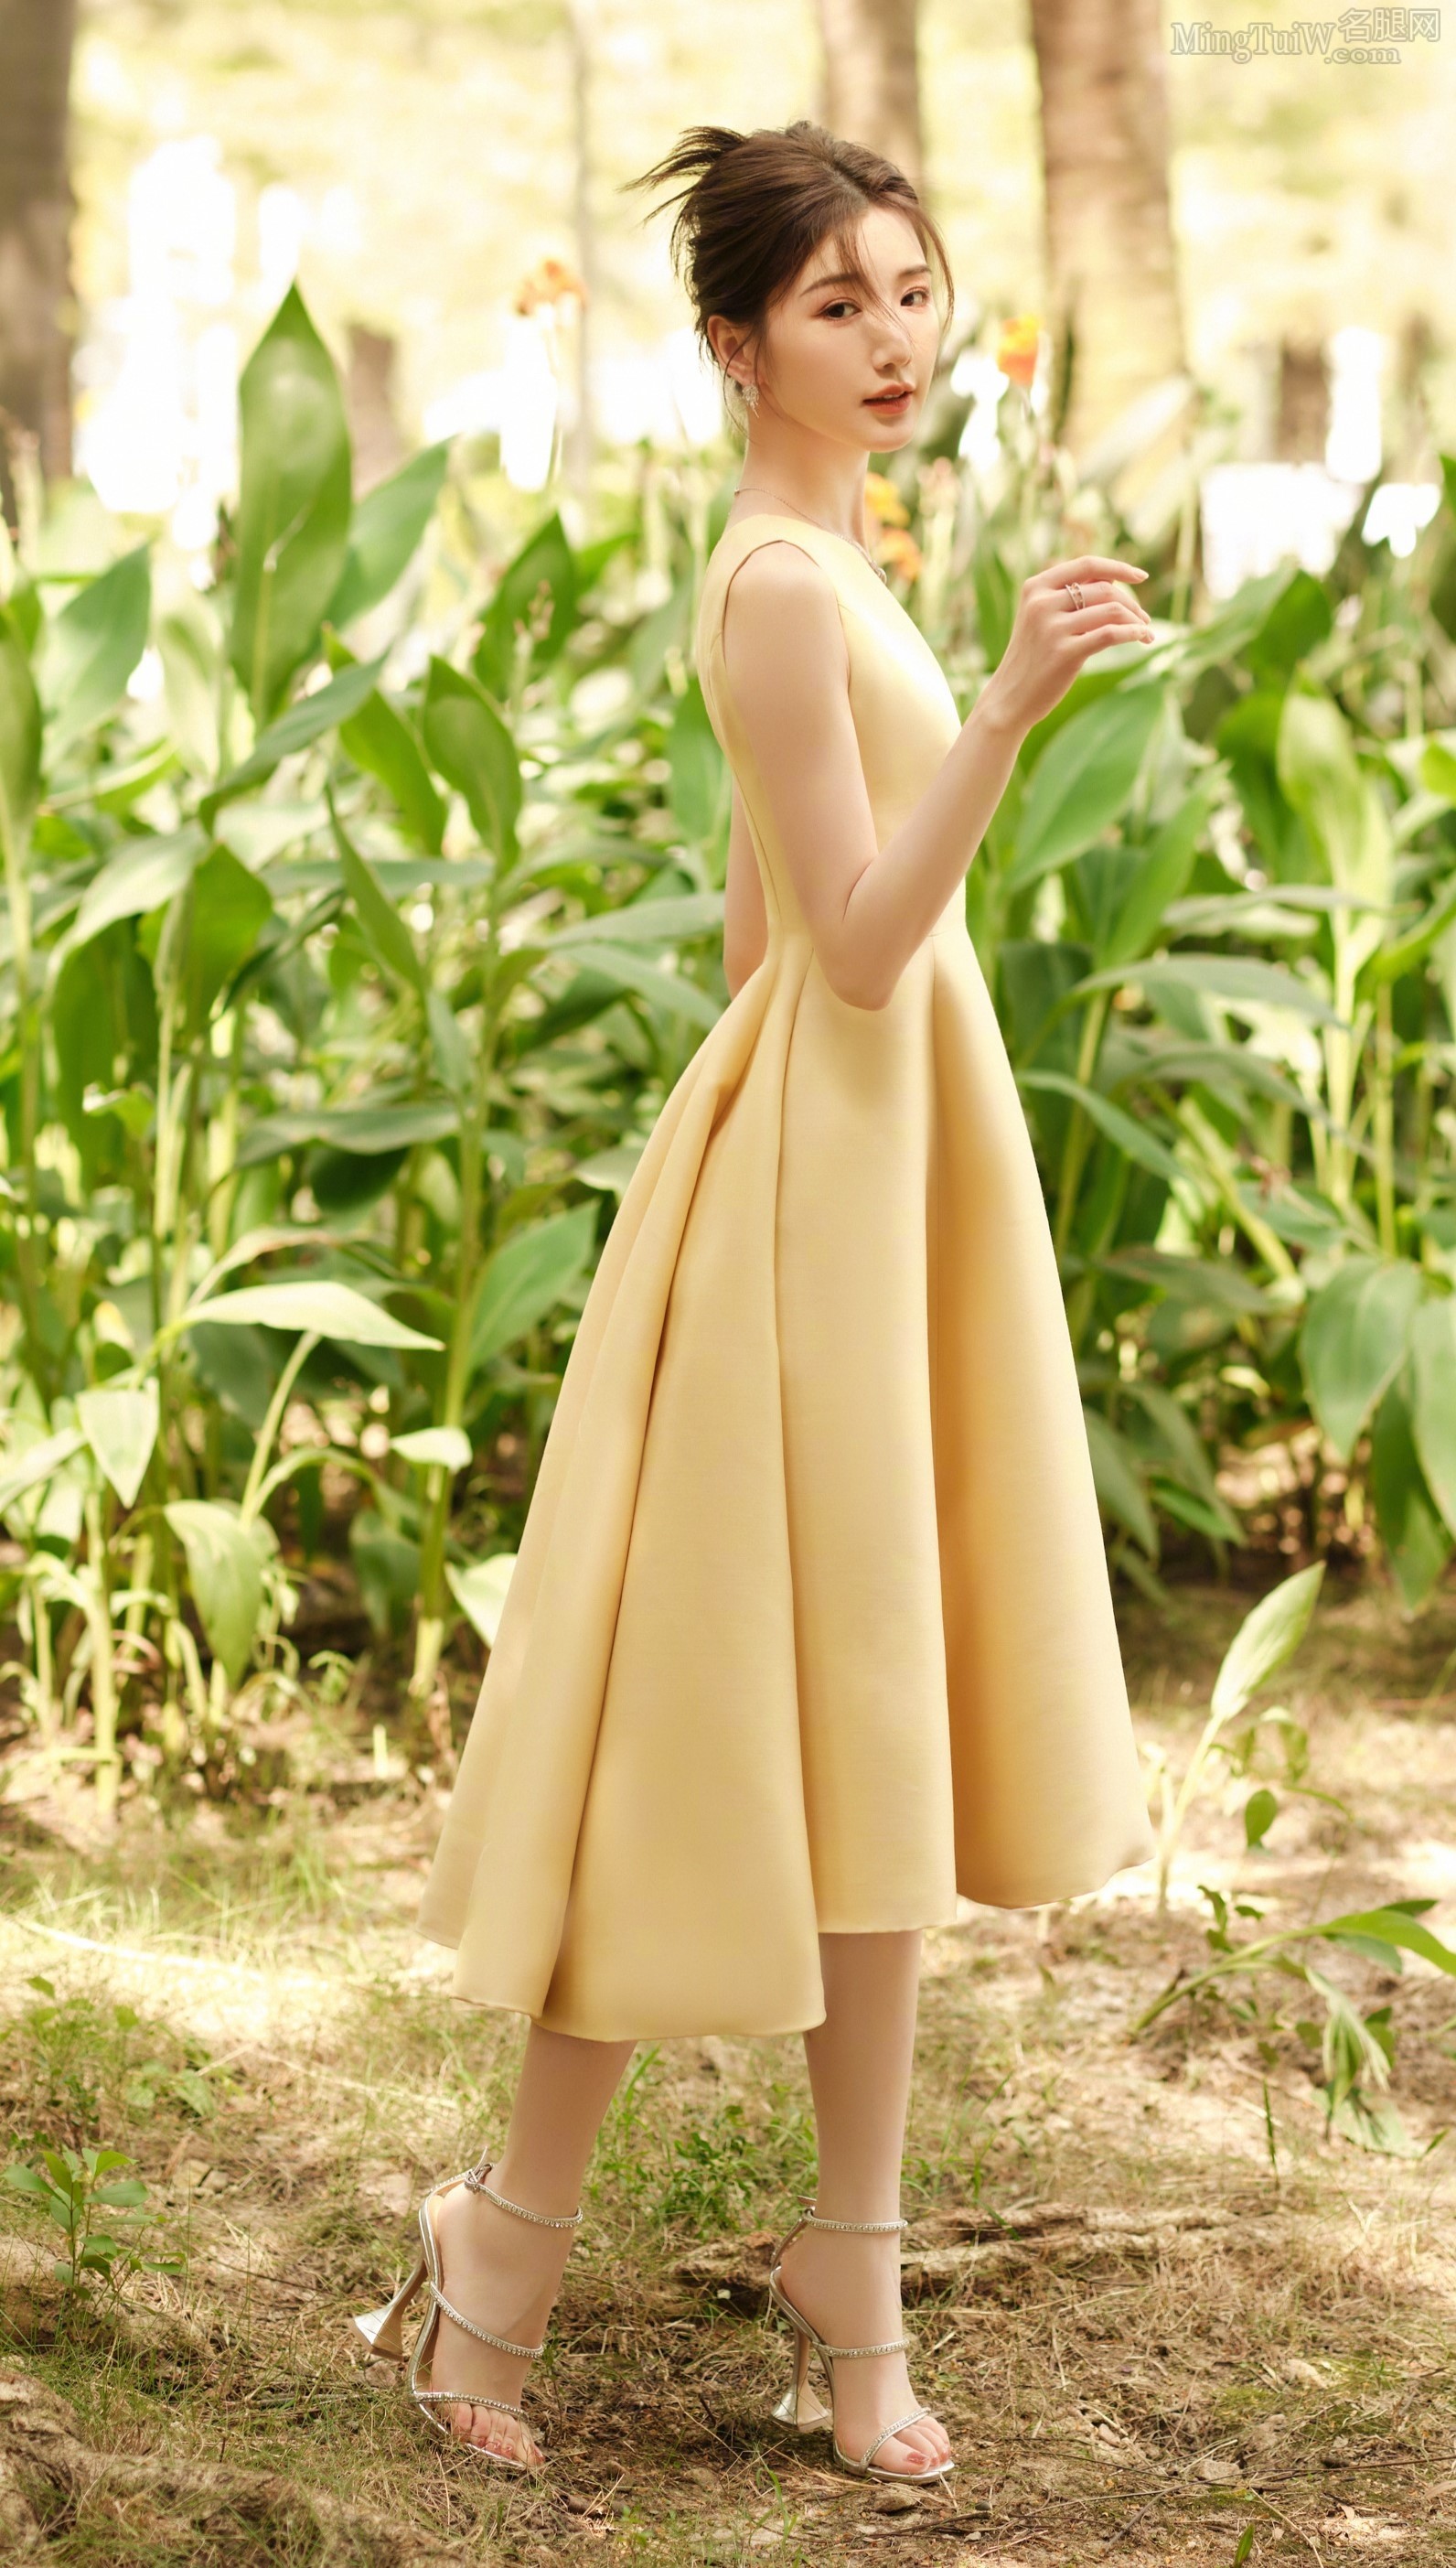 Anne Hathaway玉足踩凉高跟鞋走红毯气质灿烂明媚（7/10） - 图片 - 名腿网